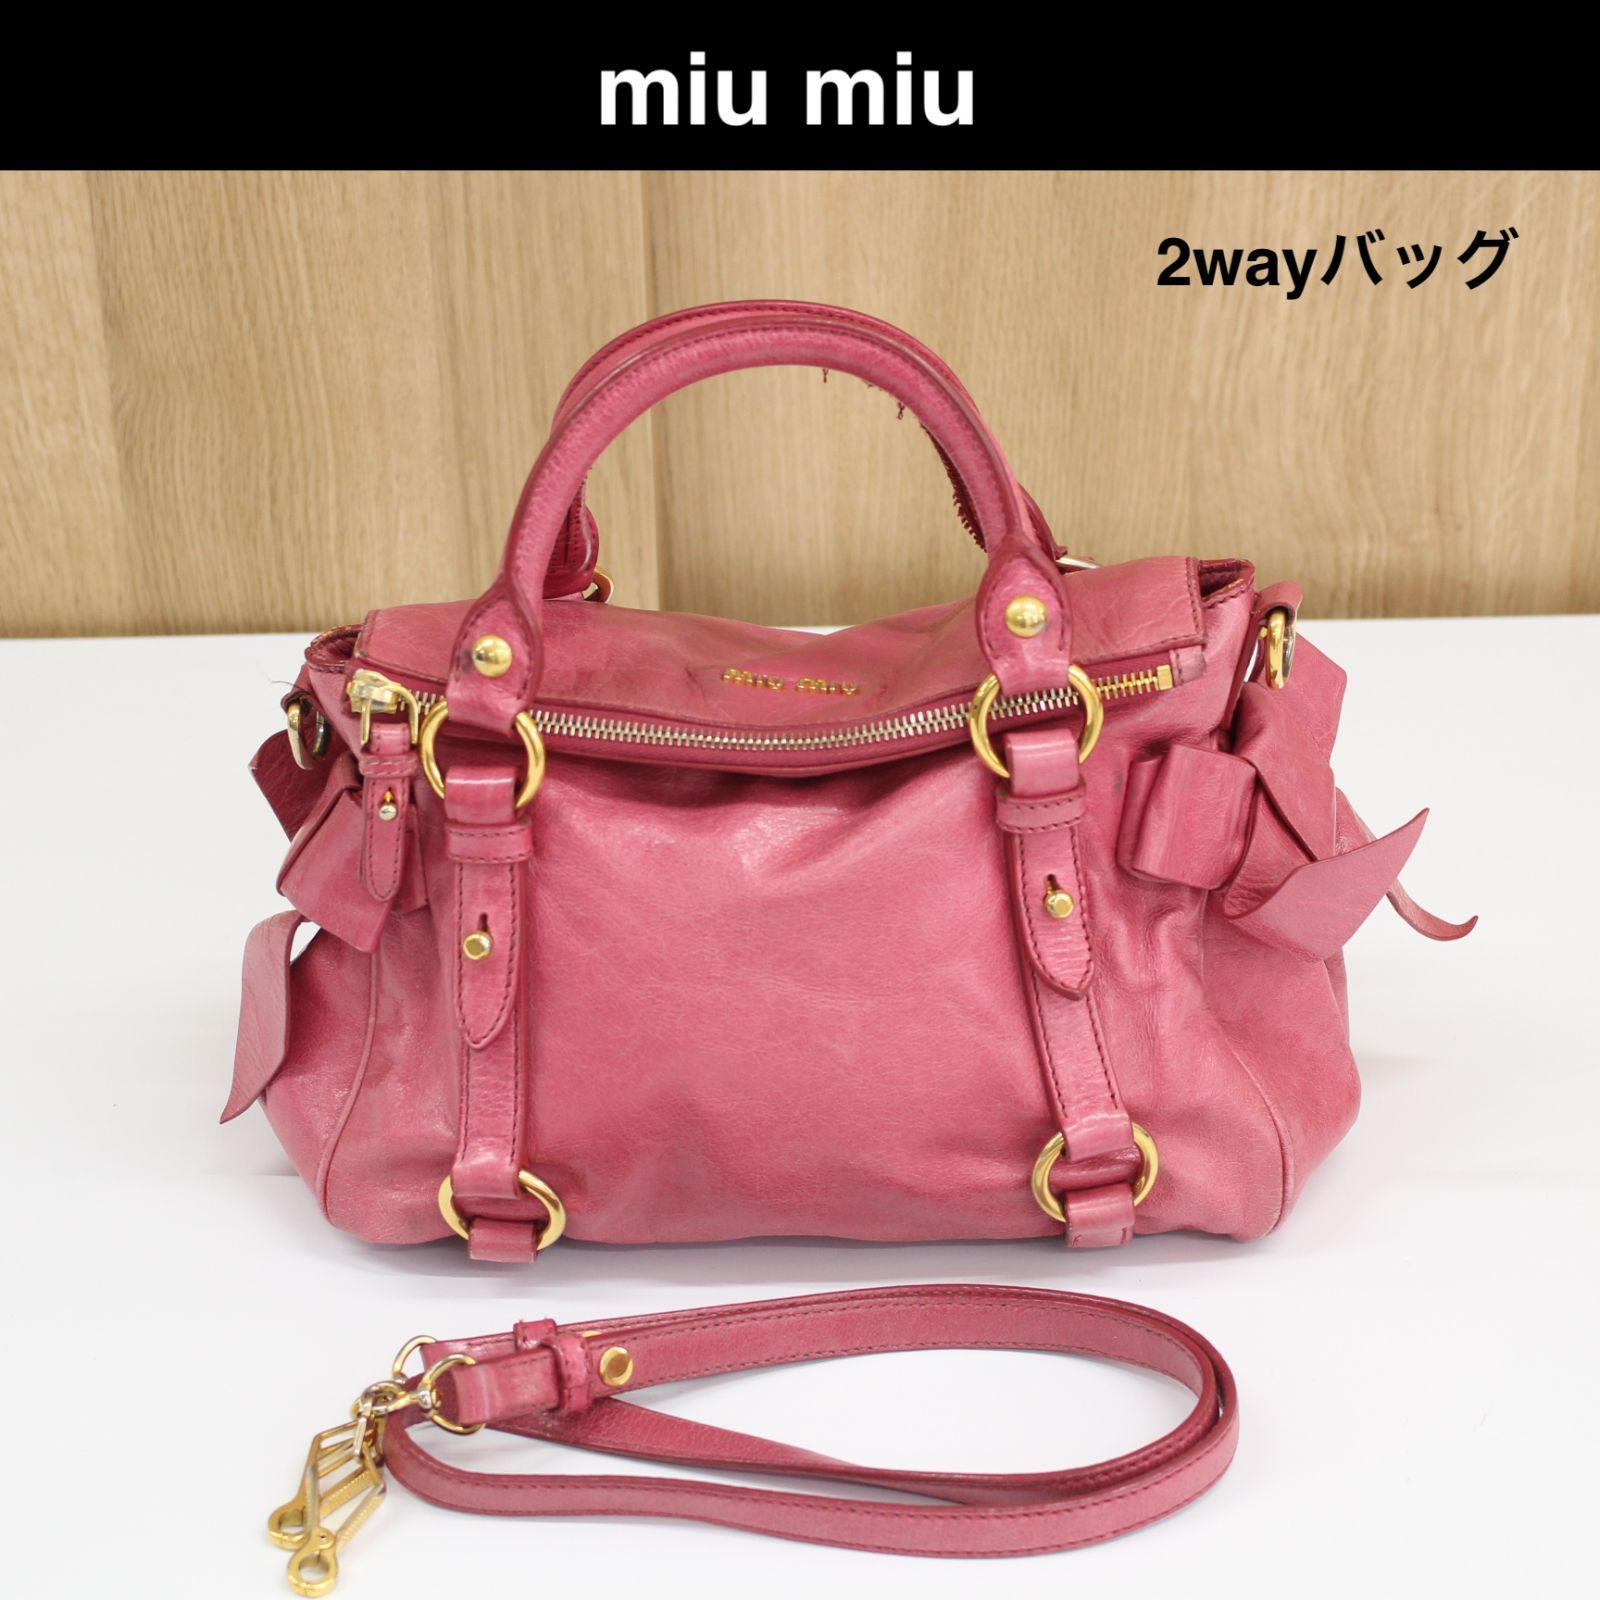 A932】miu miu 2wayバッグ レザー ピンク リボン ミュウミュウ - メルカリ